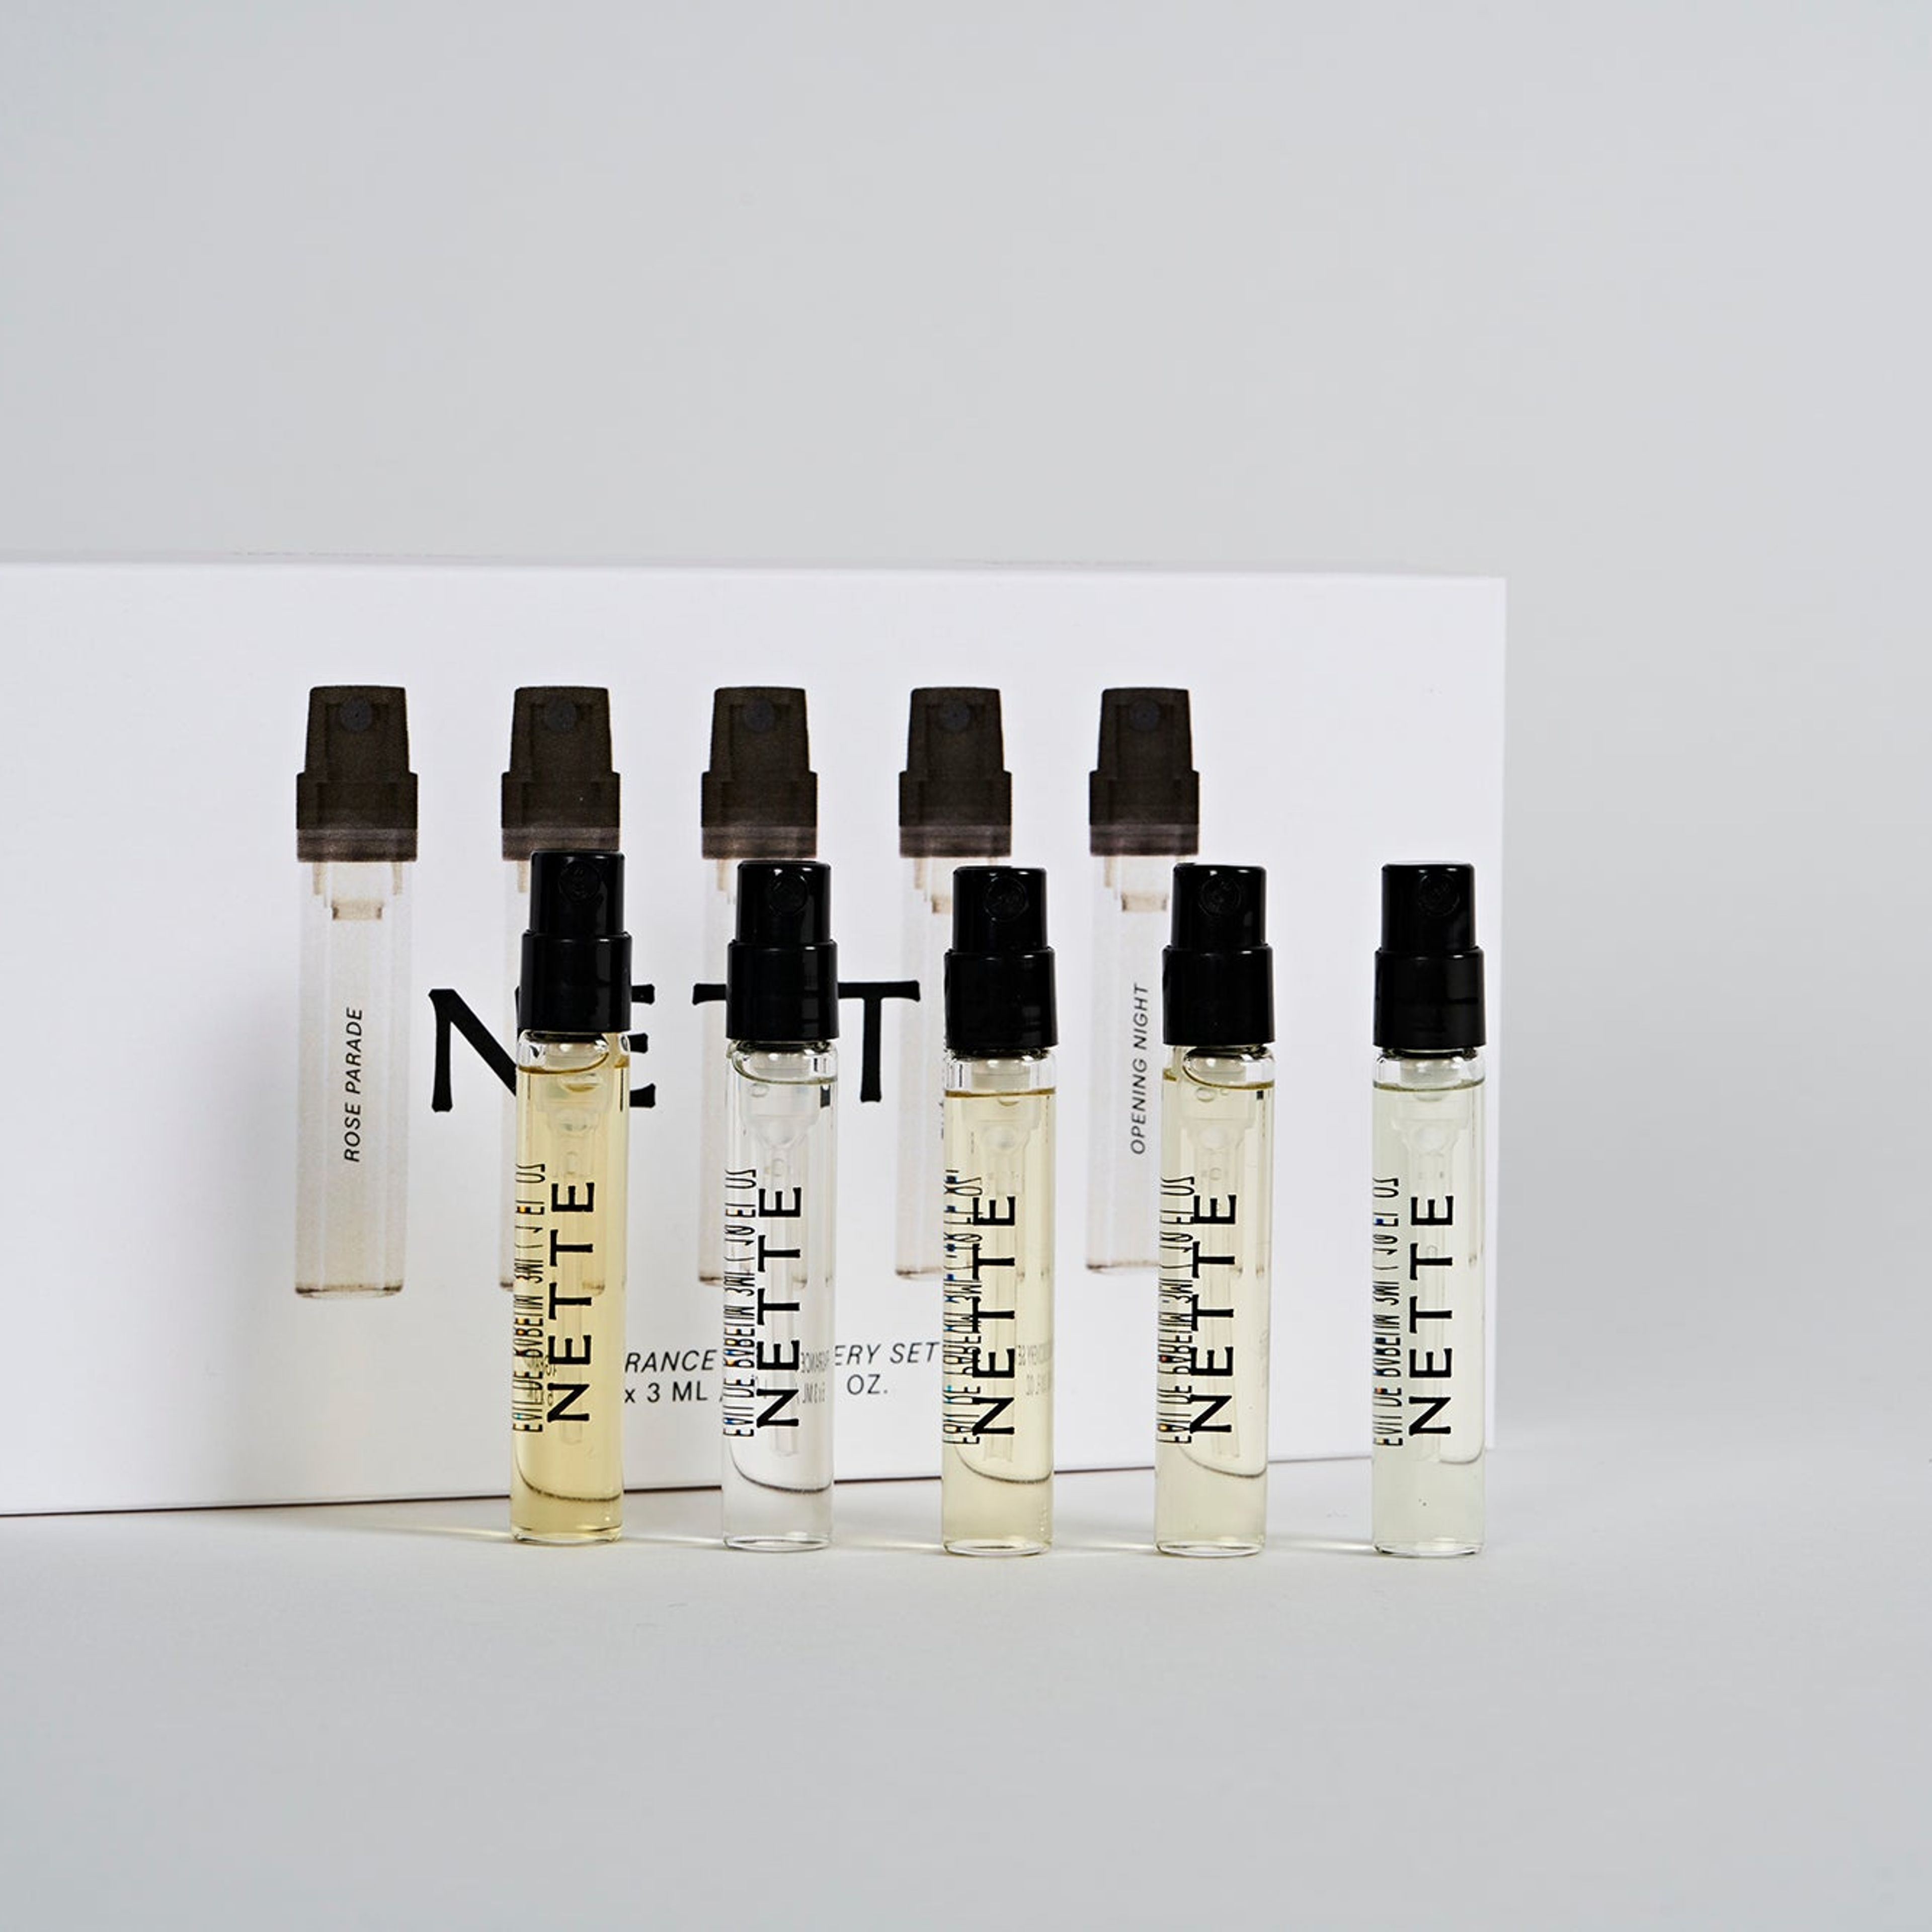 Nette Fragrance Discovery Set